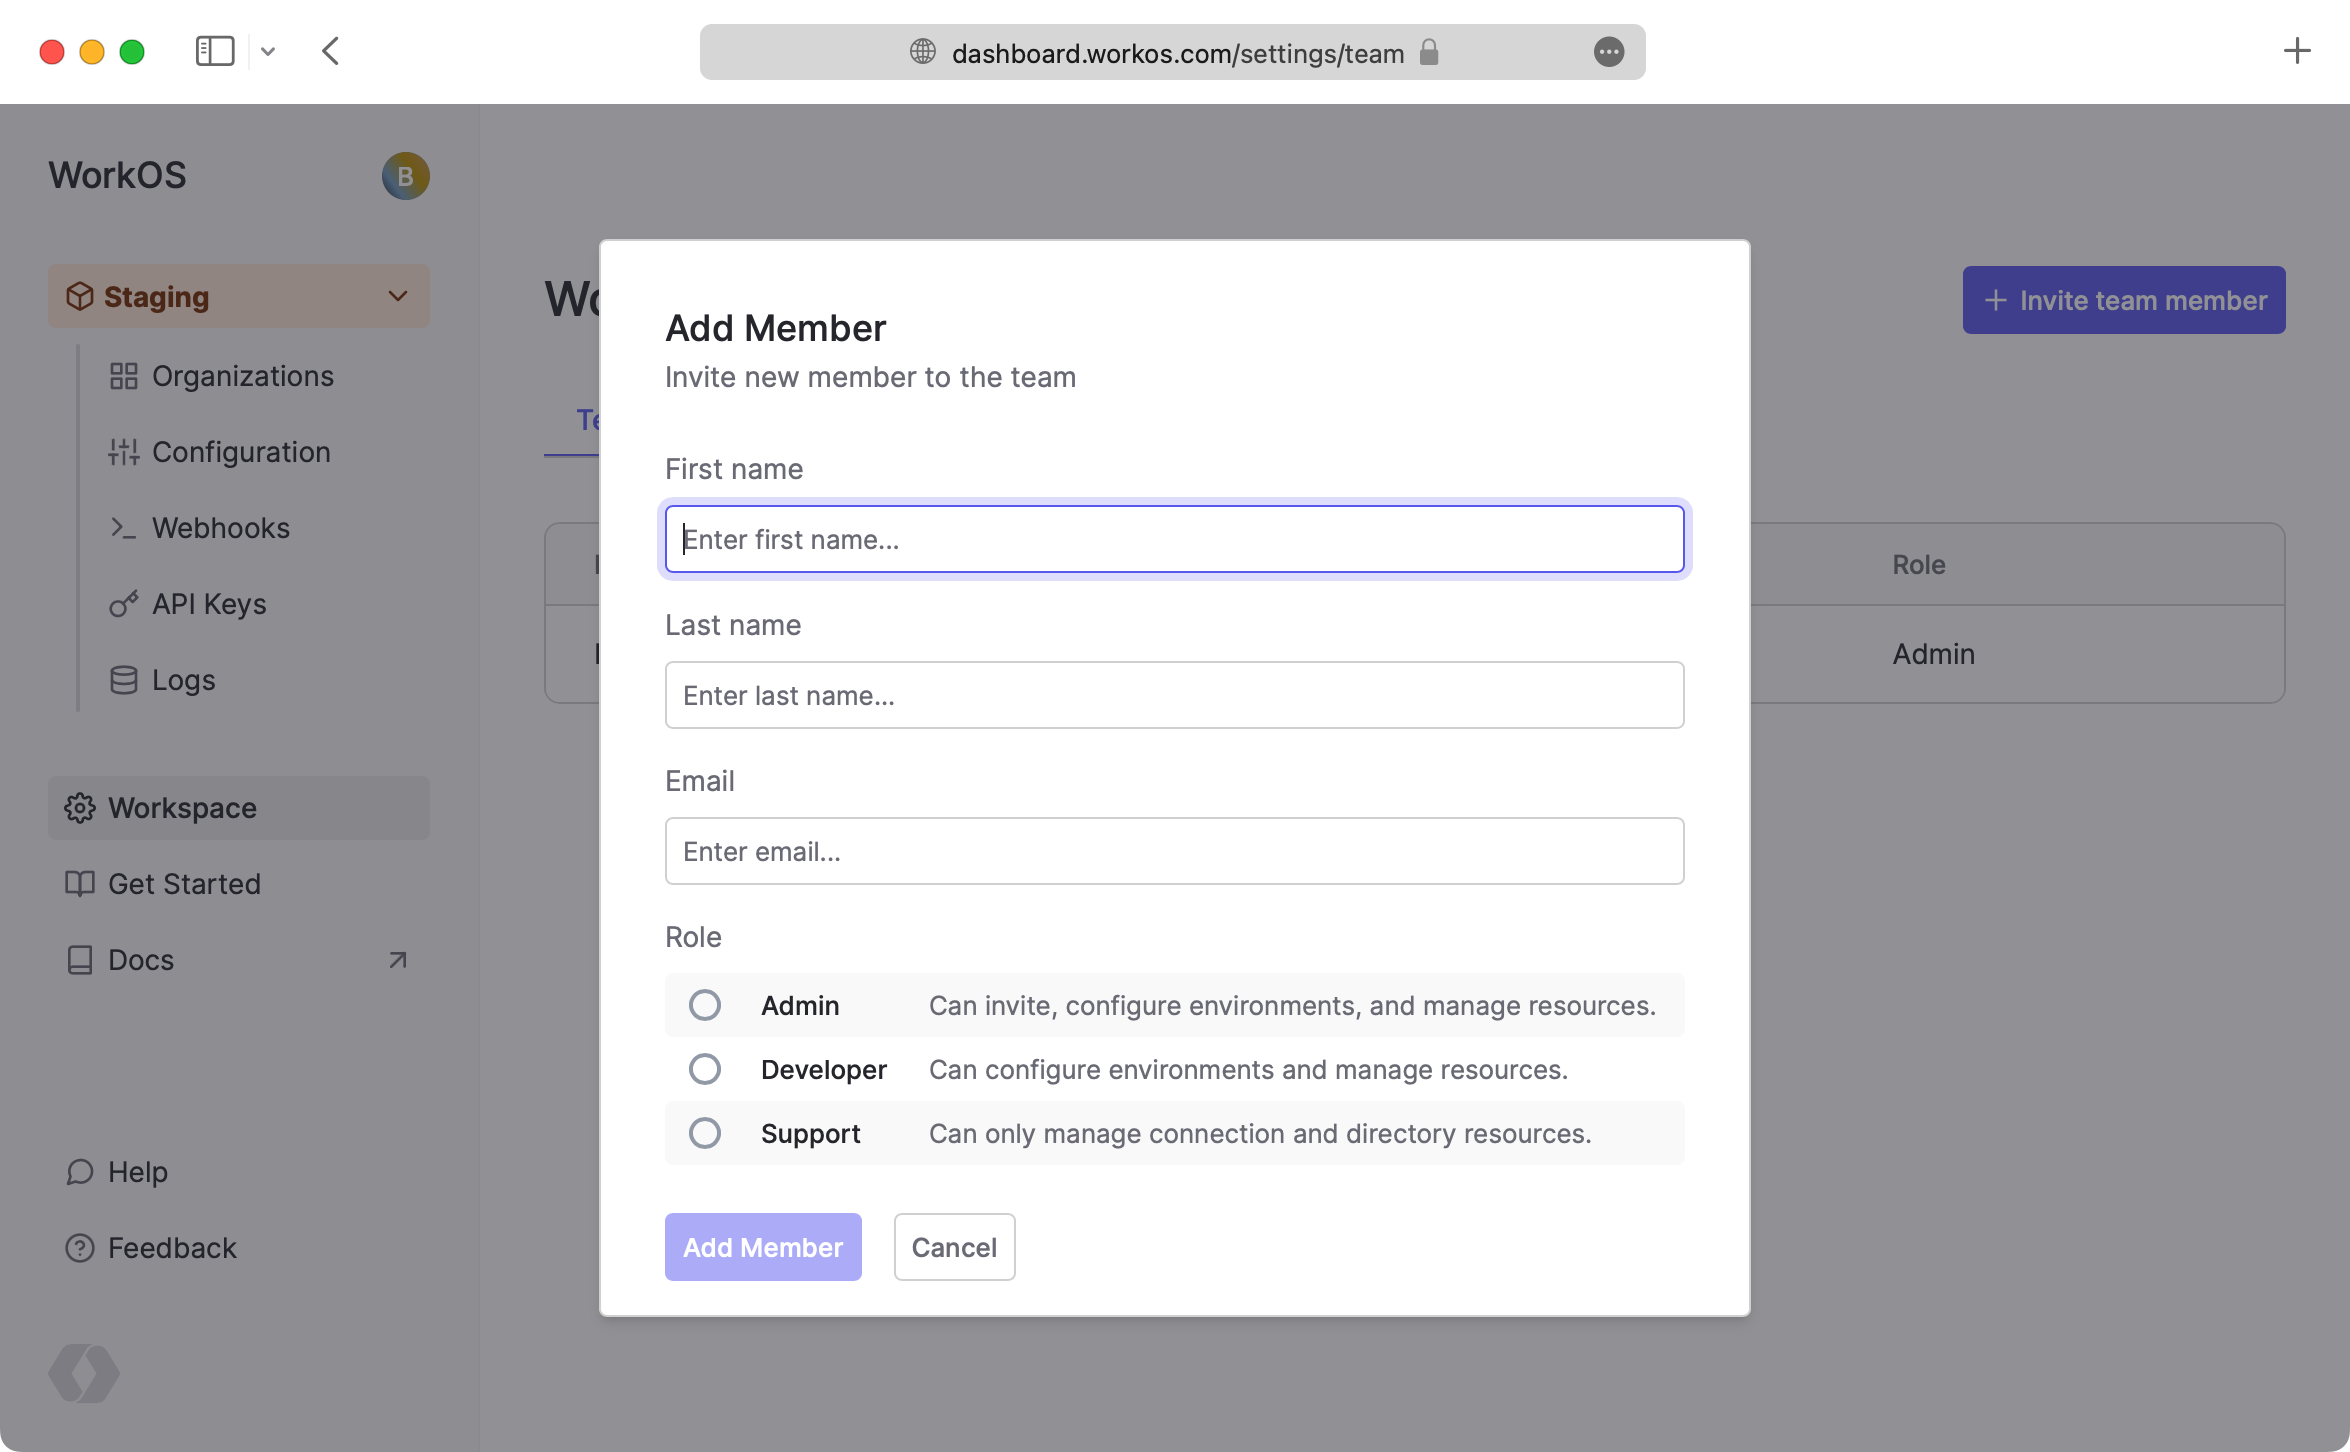 WorkOS Dashboard – Add Member